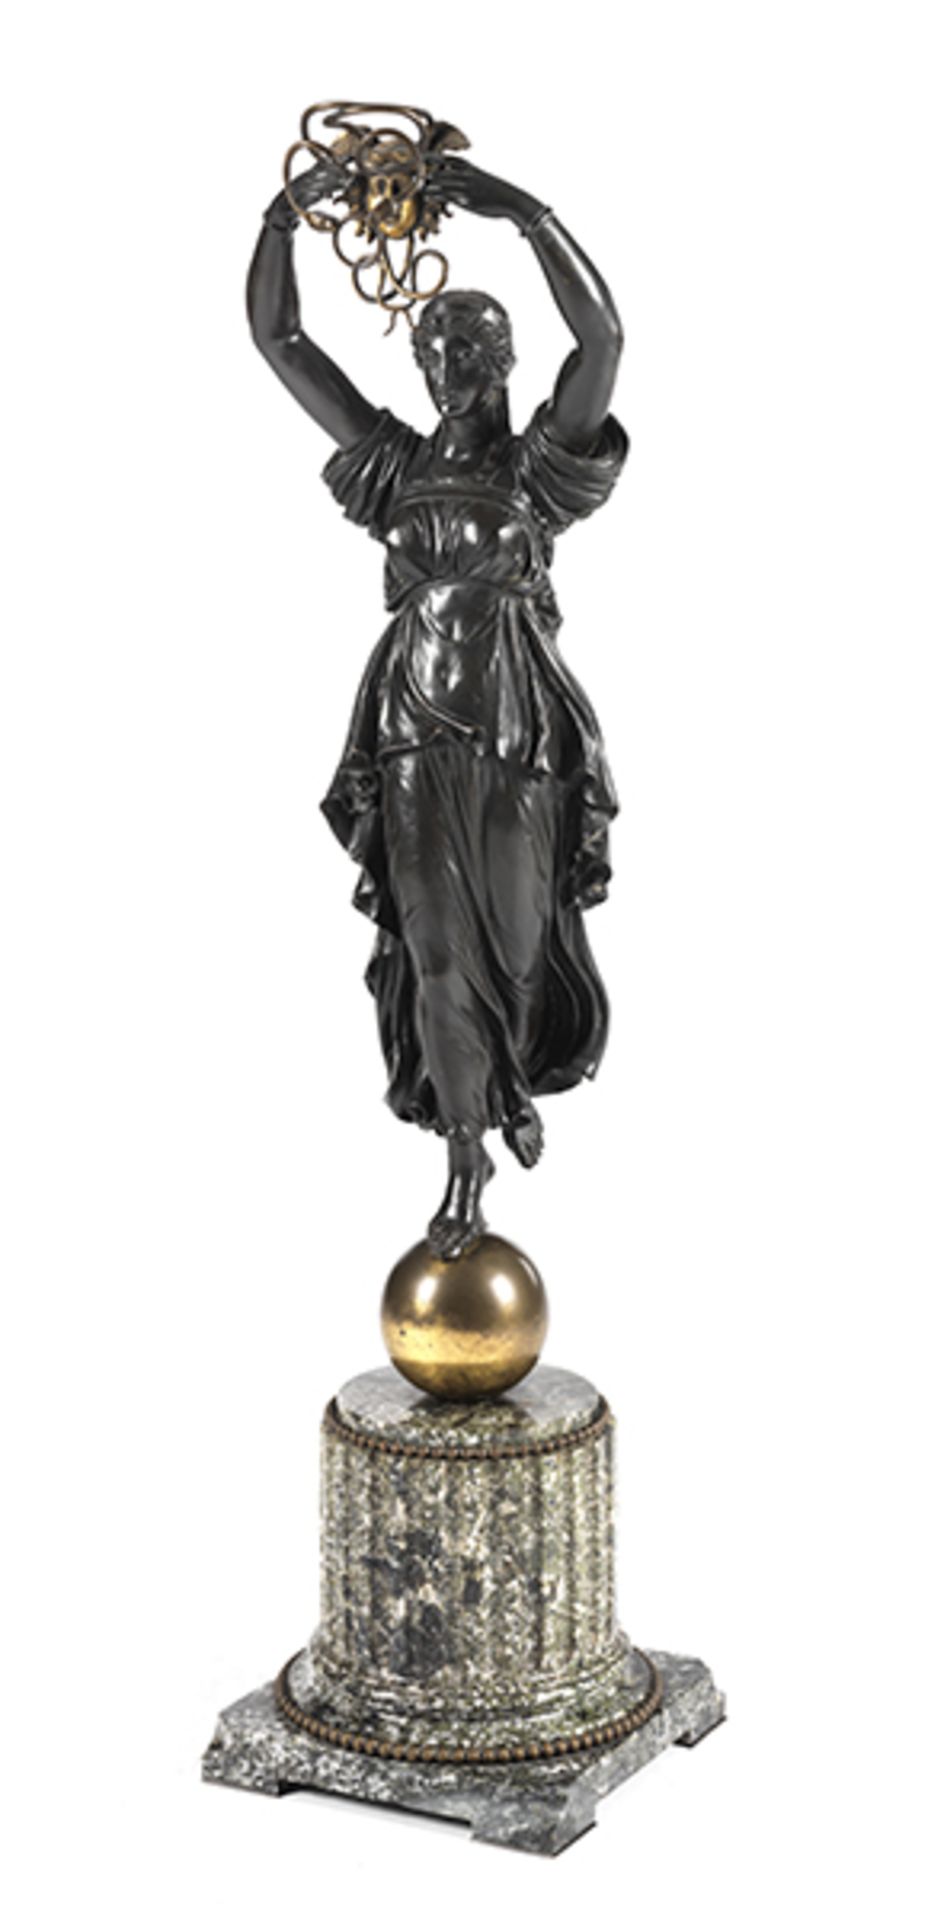 Empire-Figur in Gestalt einer Medusa Höhe inkl. Sockel: 96 cm. Frankreich, 19. Jahrhundert.